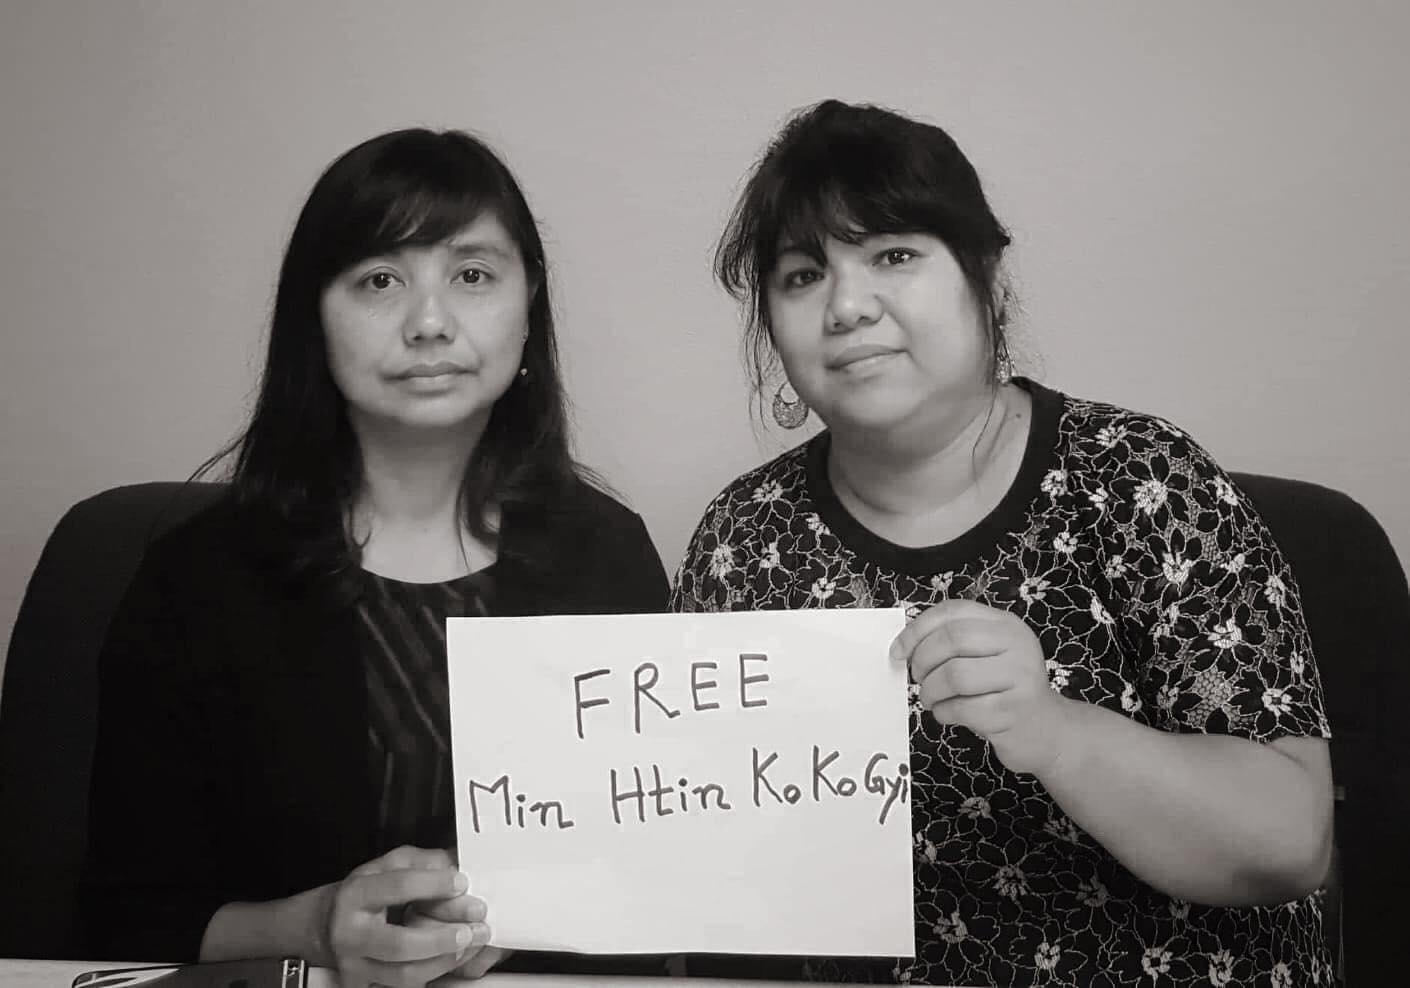 Supporters of Min Htin Ko Ko Gyi based in Los Angeles, USA. (Facebook / Justice For Min Htin Ko Ko Gyi)